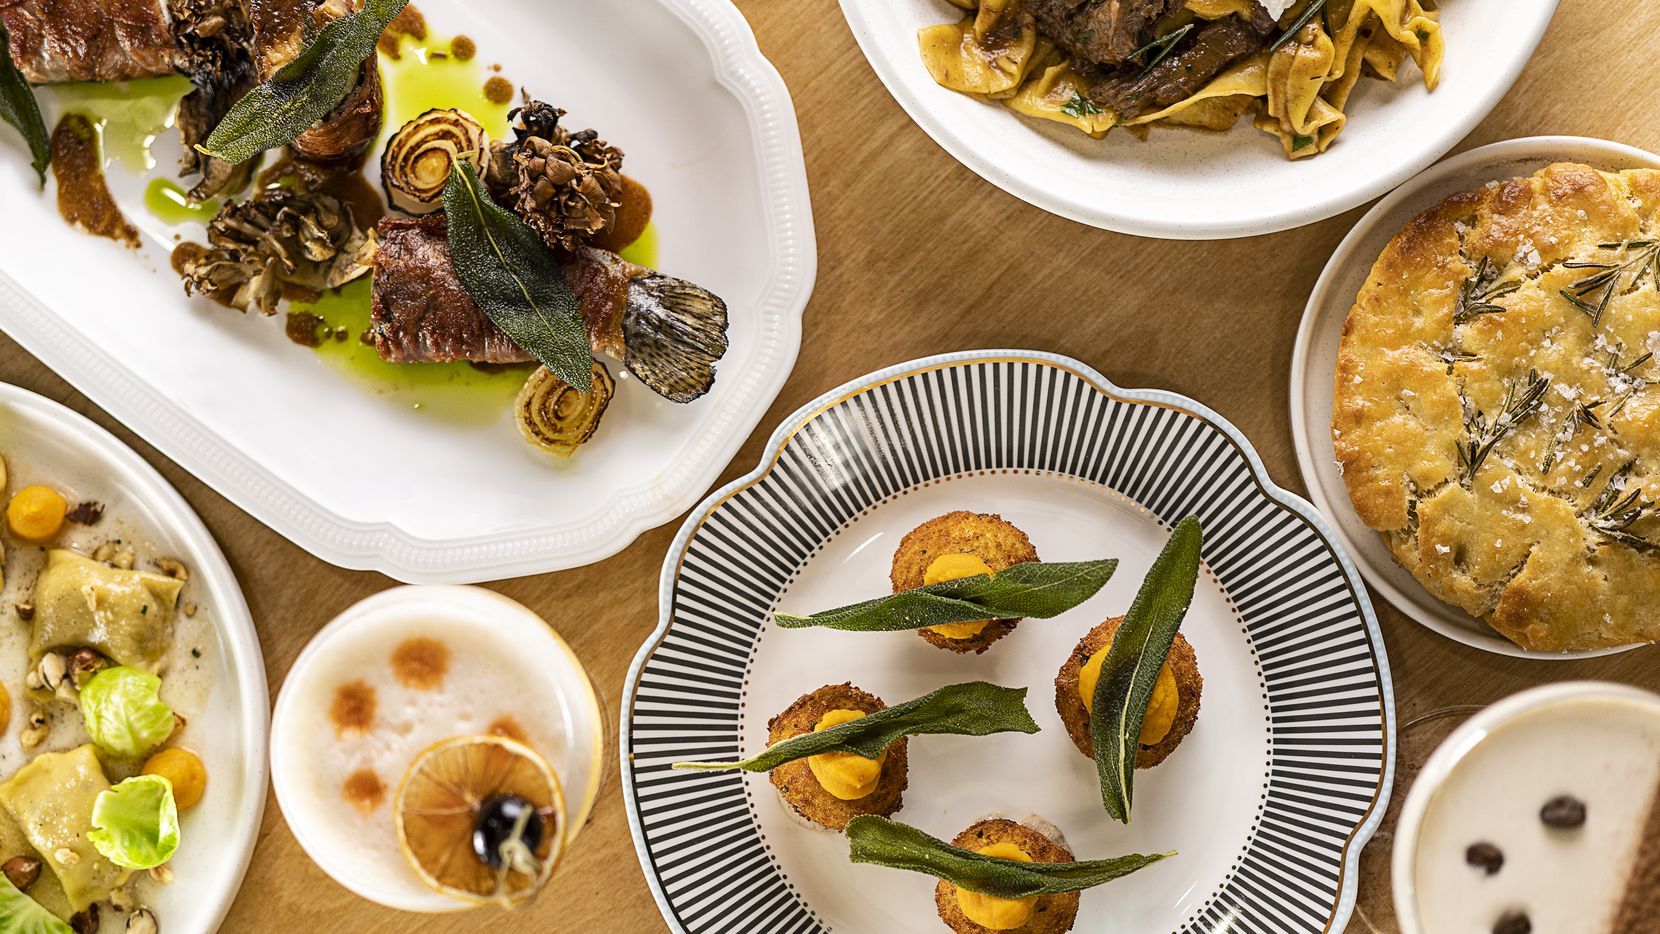 West Village Welcomes Italian Restaurant Fiatto This Spring